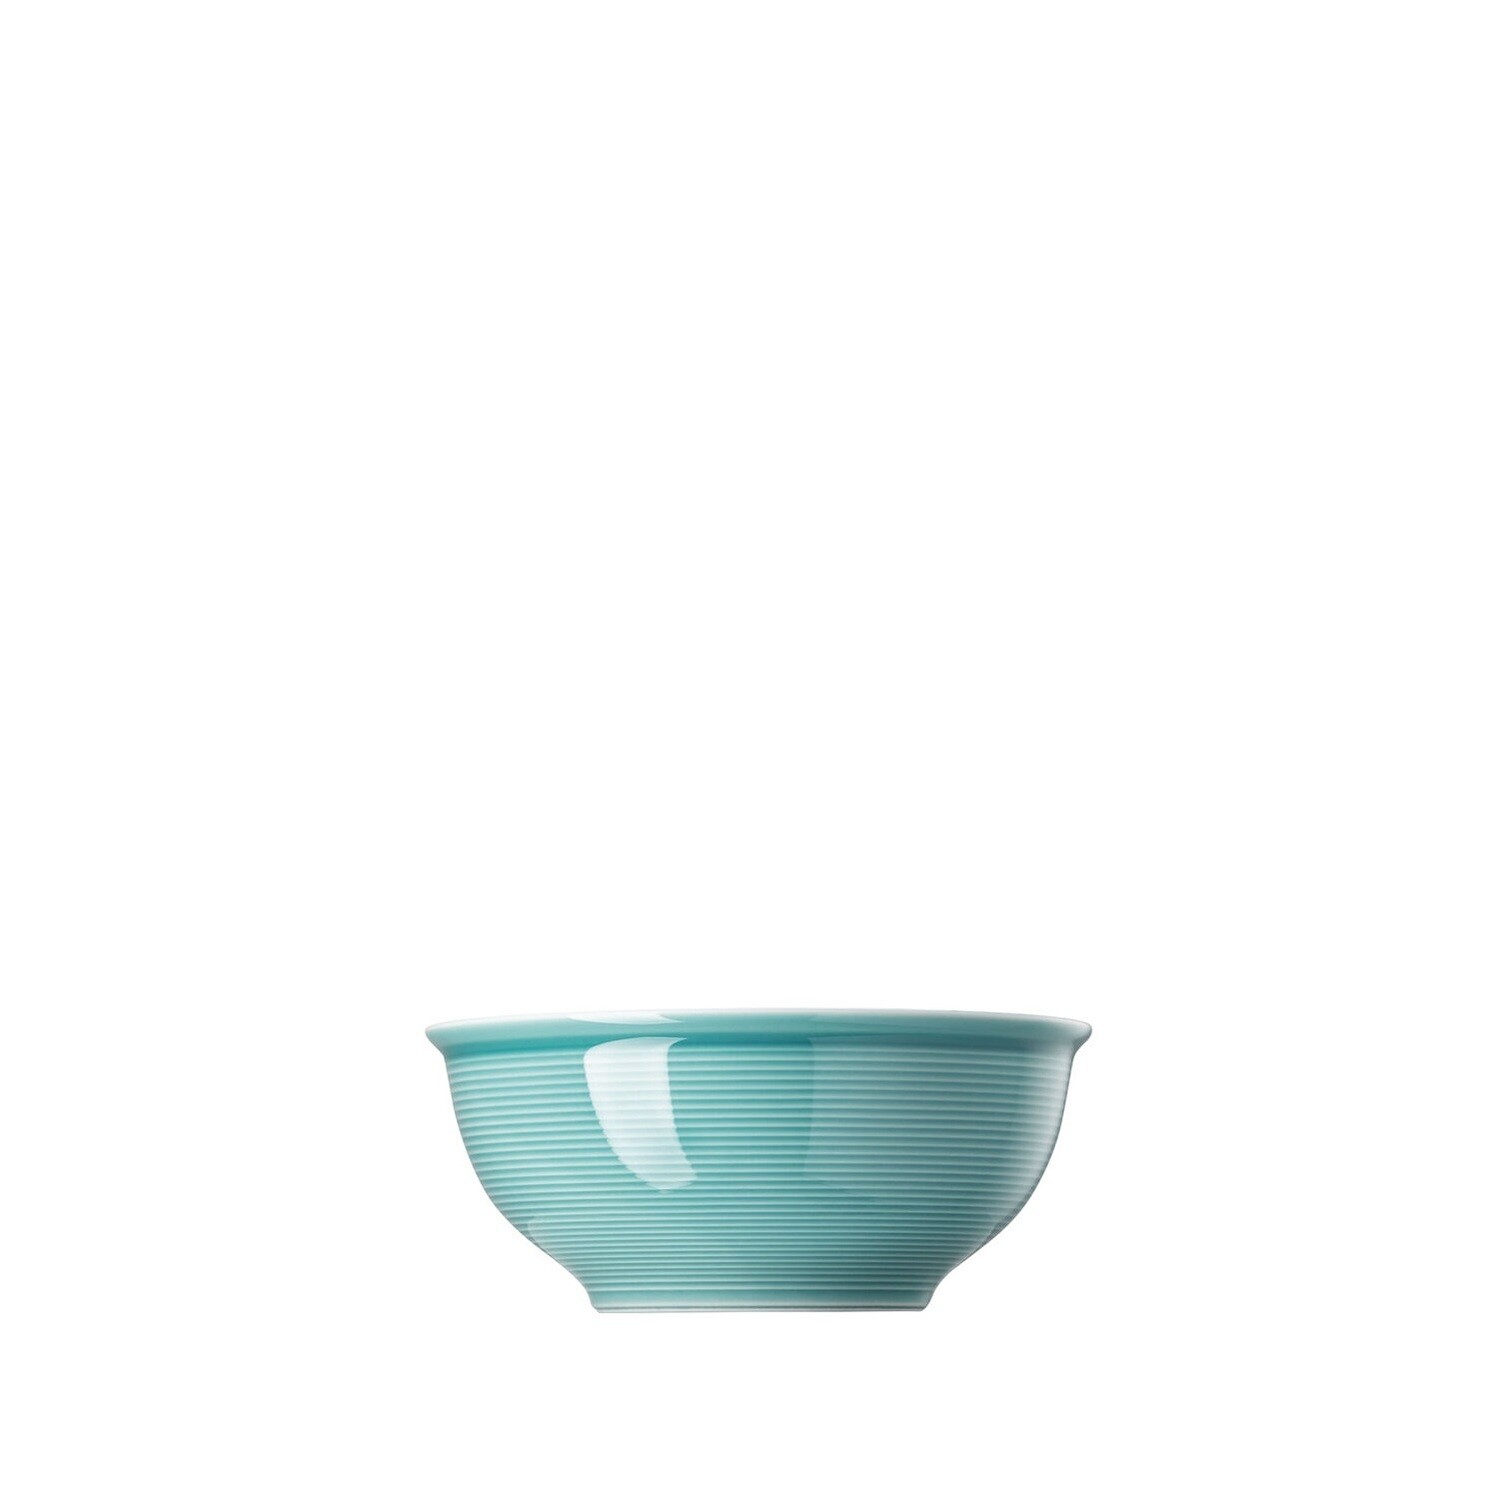 THOMAS 'trend' bowl 16cm ice blue  PROMO 21,90 -20%